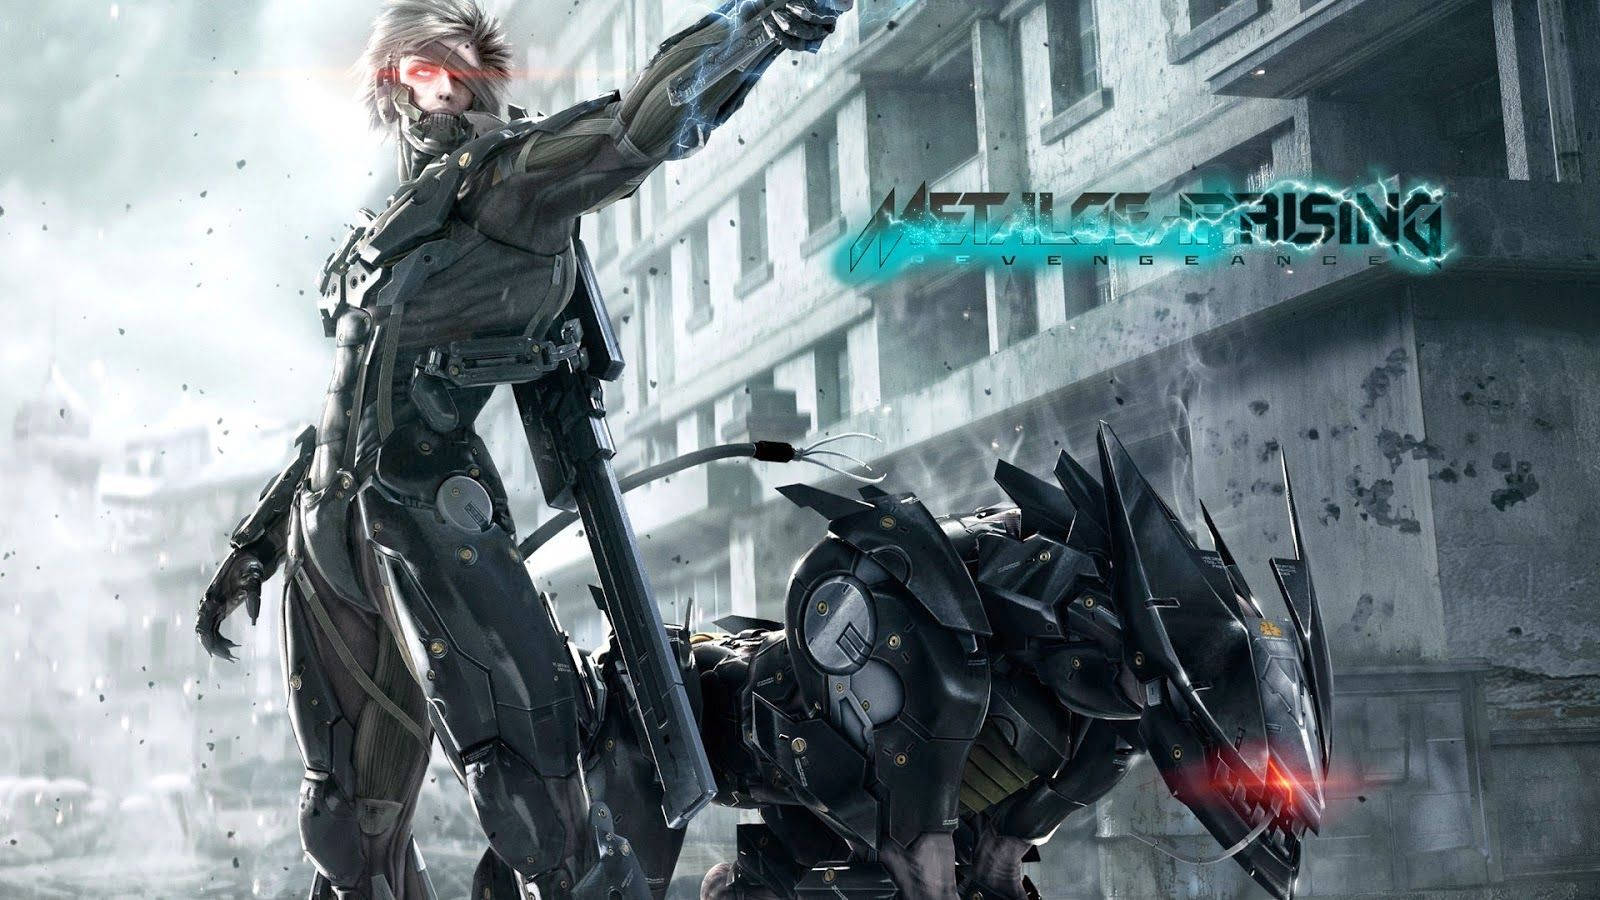 Cool Gaming Metal Gear Rising Background